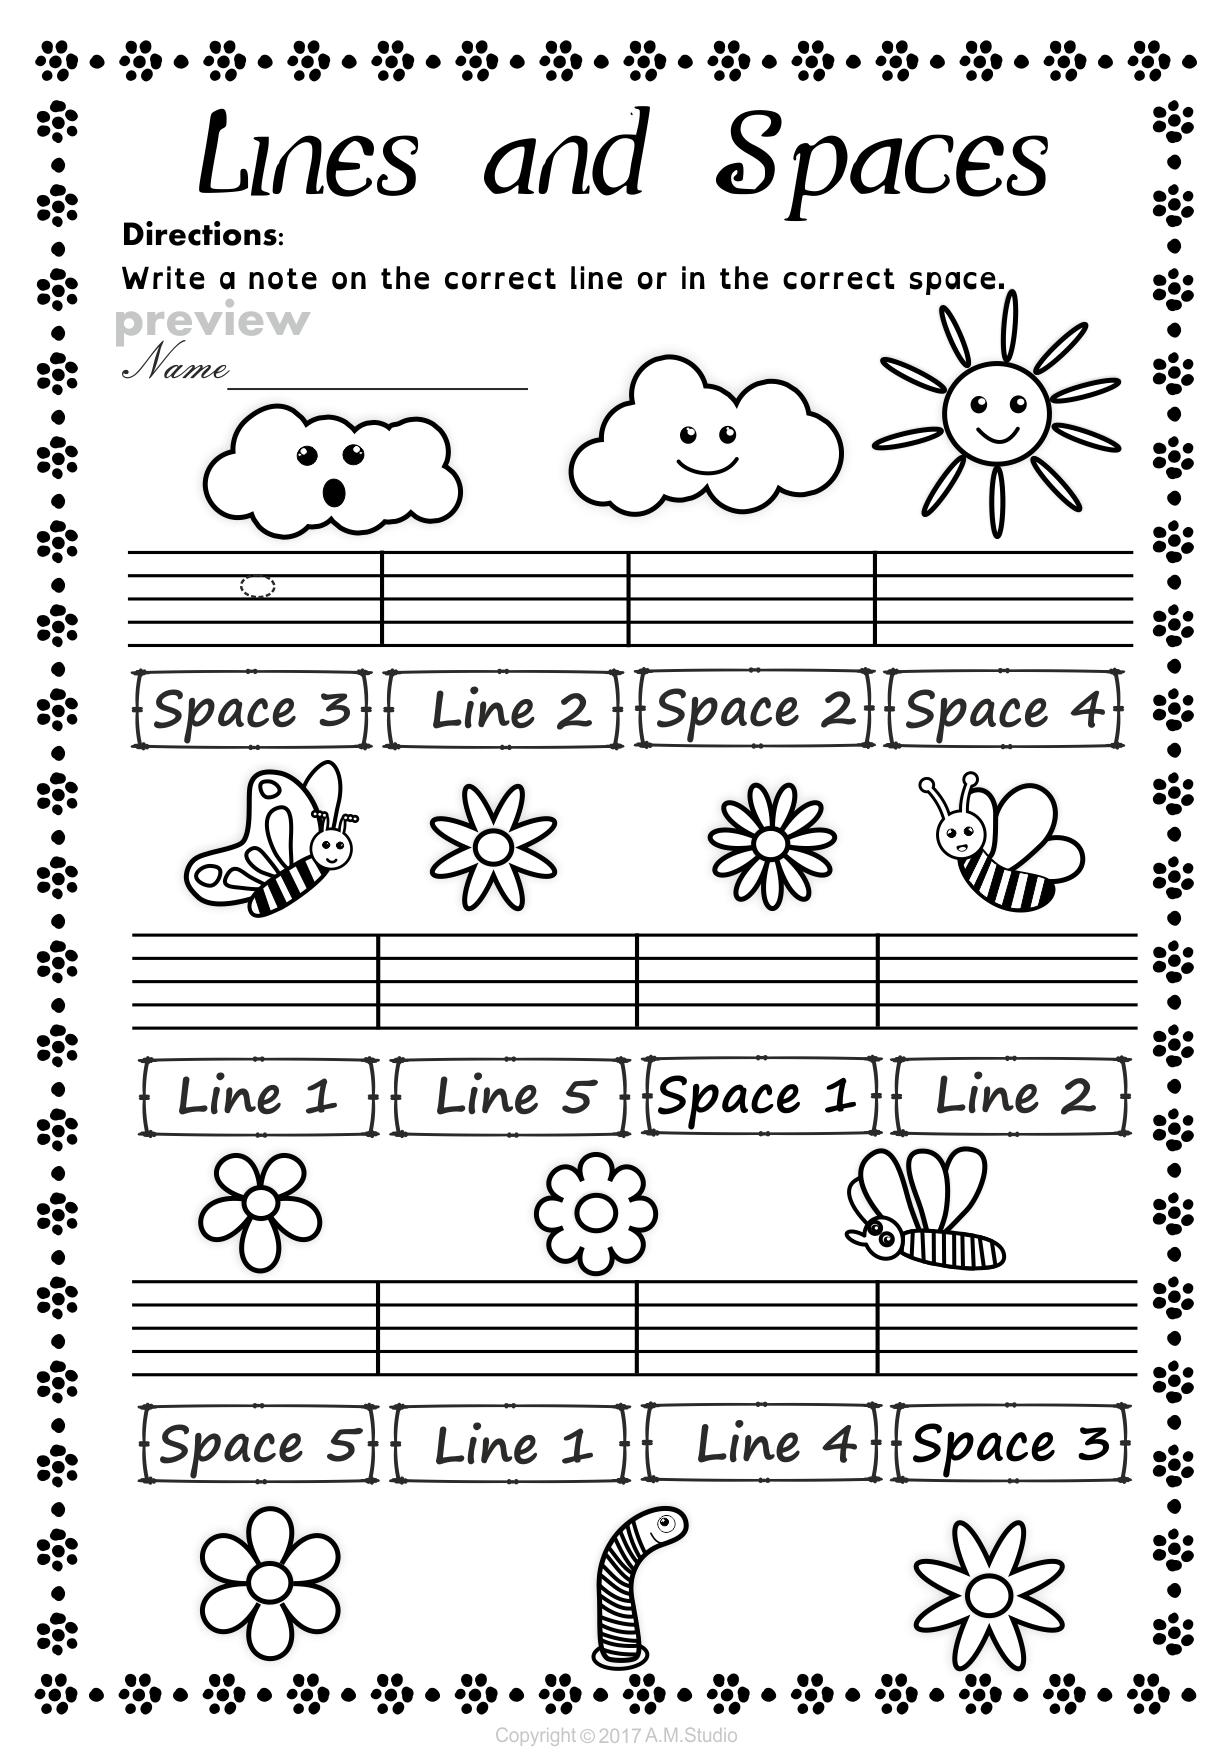 Lines and Spaces Spring Worksheet Pack (img # 2)